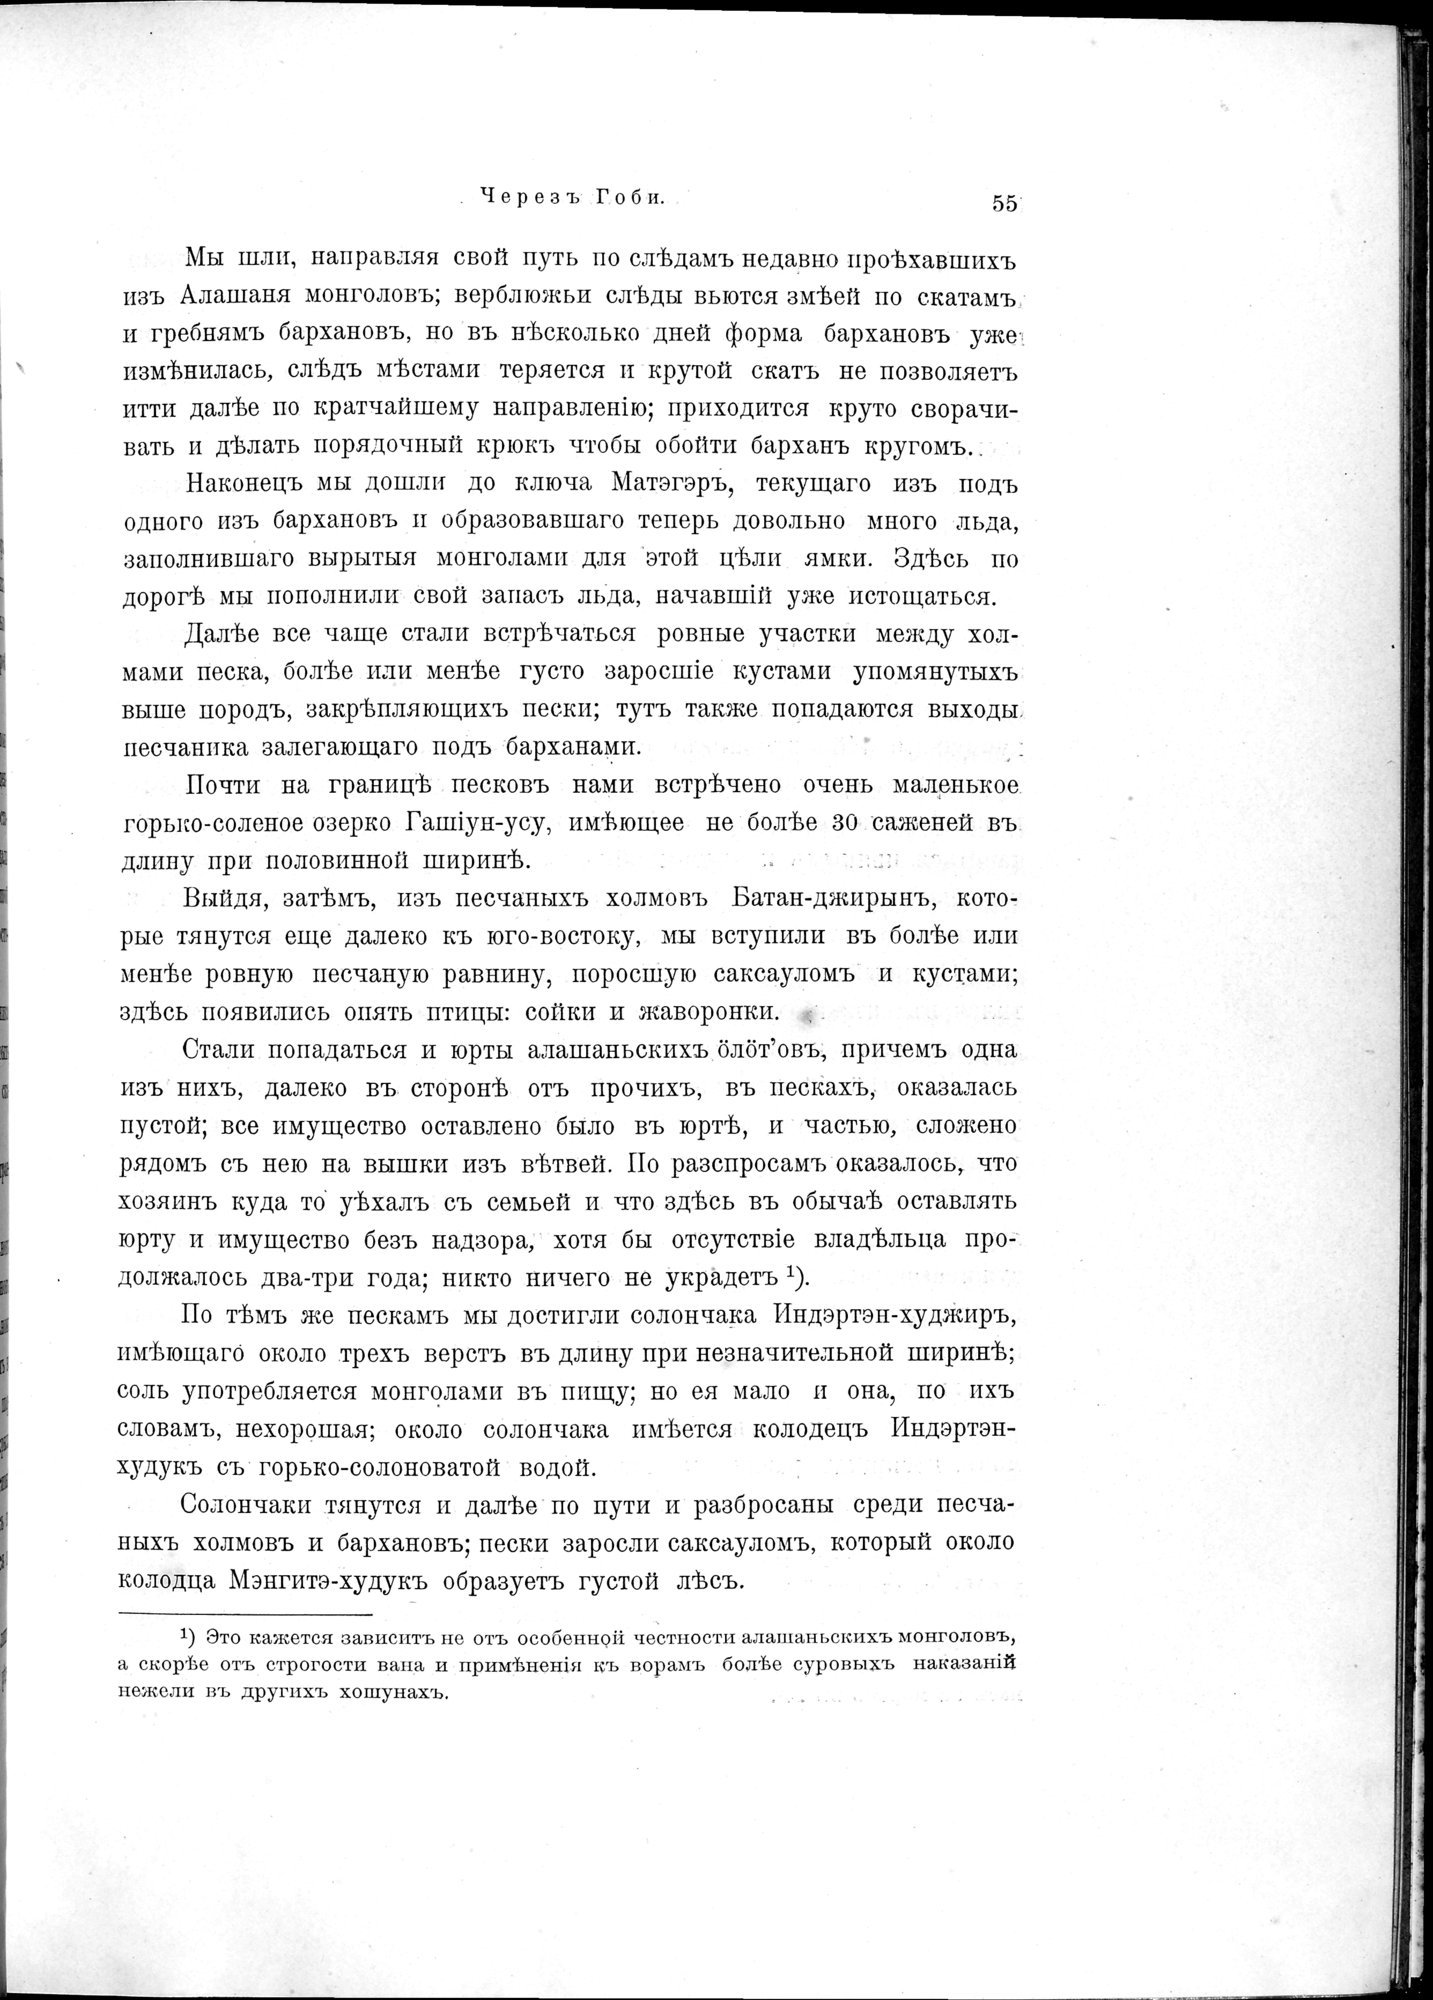 Mongoliia i Kam : vol.3 / Page 77 (Grayscale High Resolution Image)